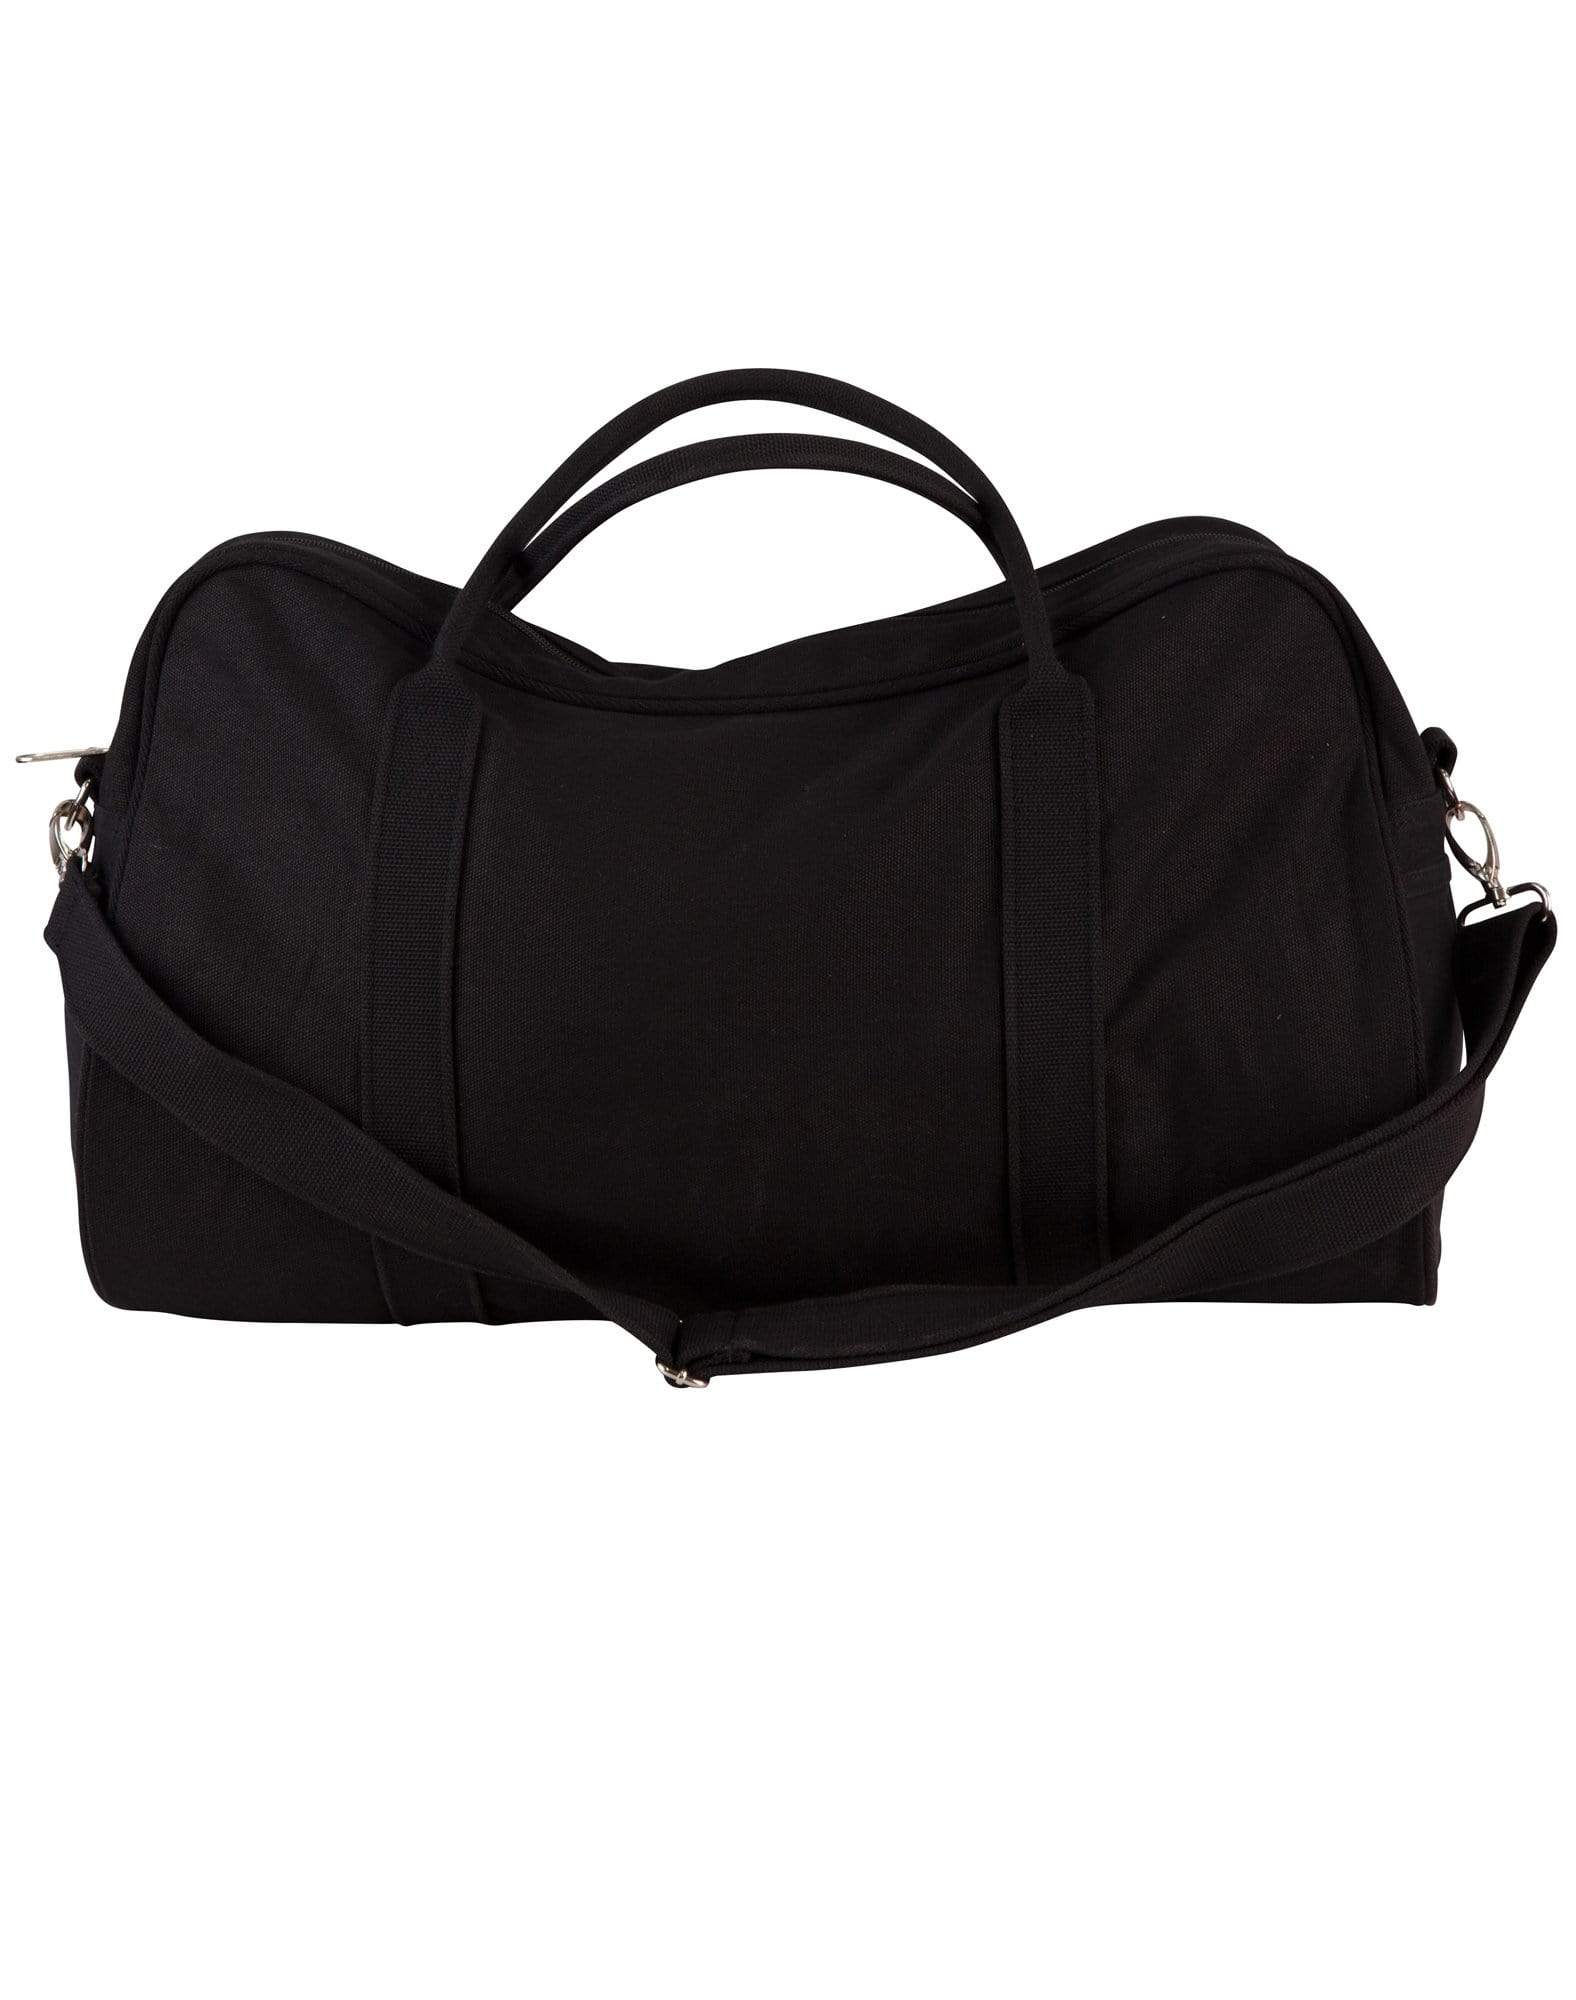 Impact Casual Bag B2100 Active Wear Winning Spirit Black/Black "(w)58cm x (h)35cm x (d)25cm 50 Litres Capacity" 